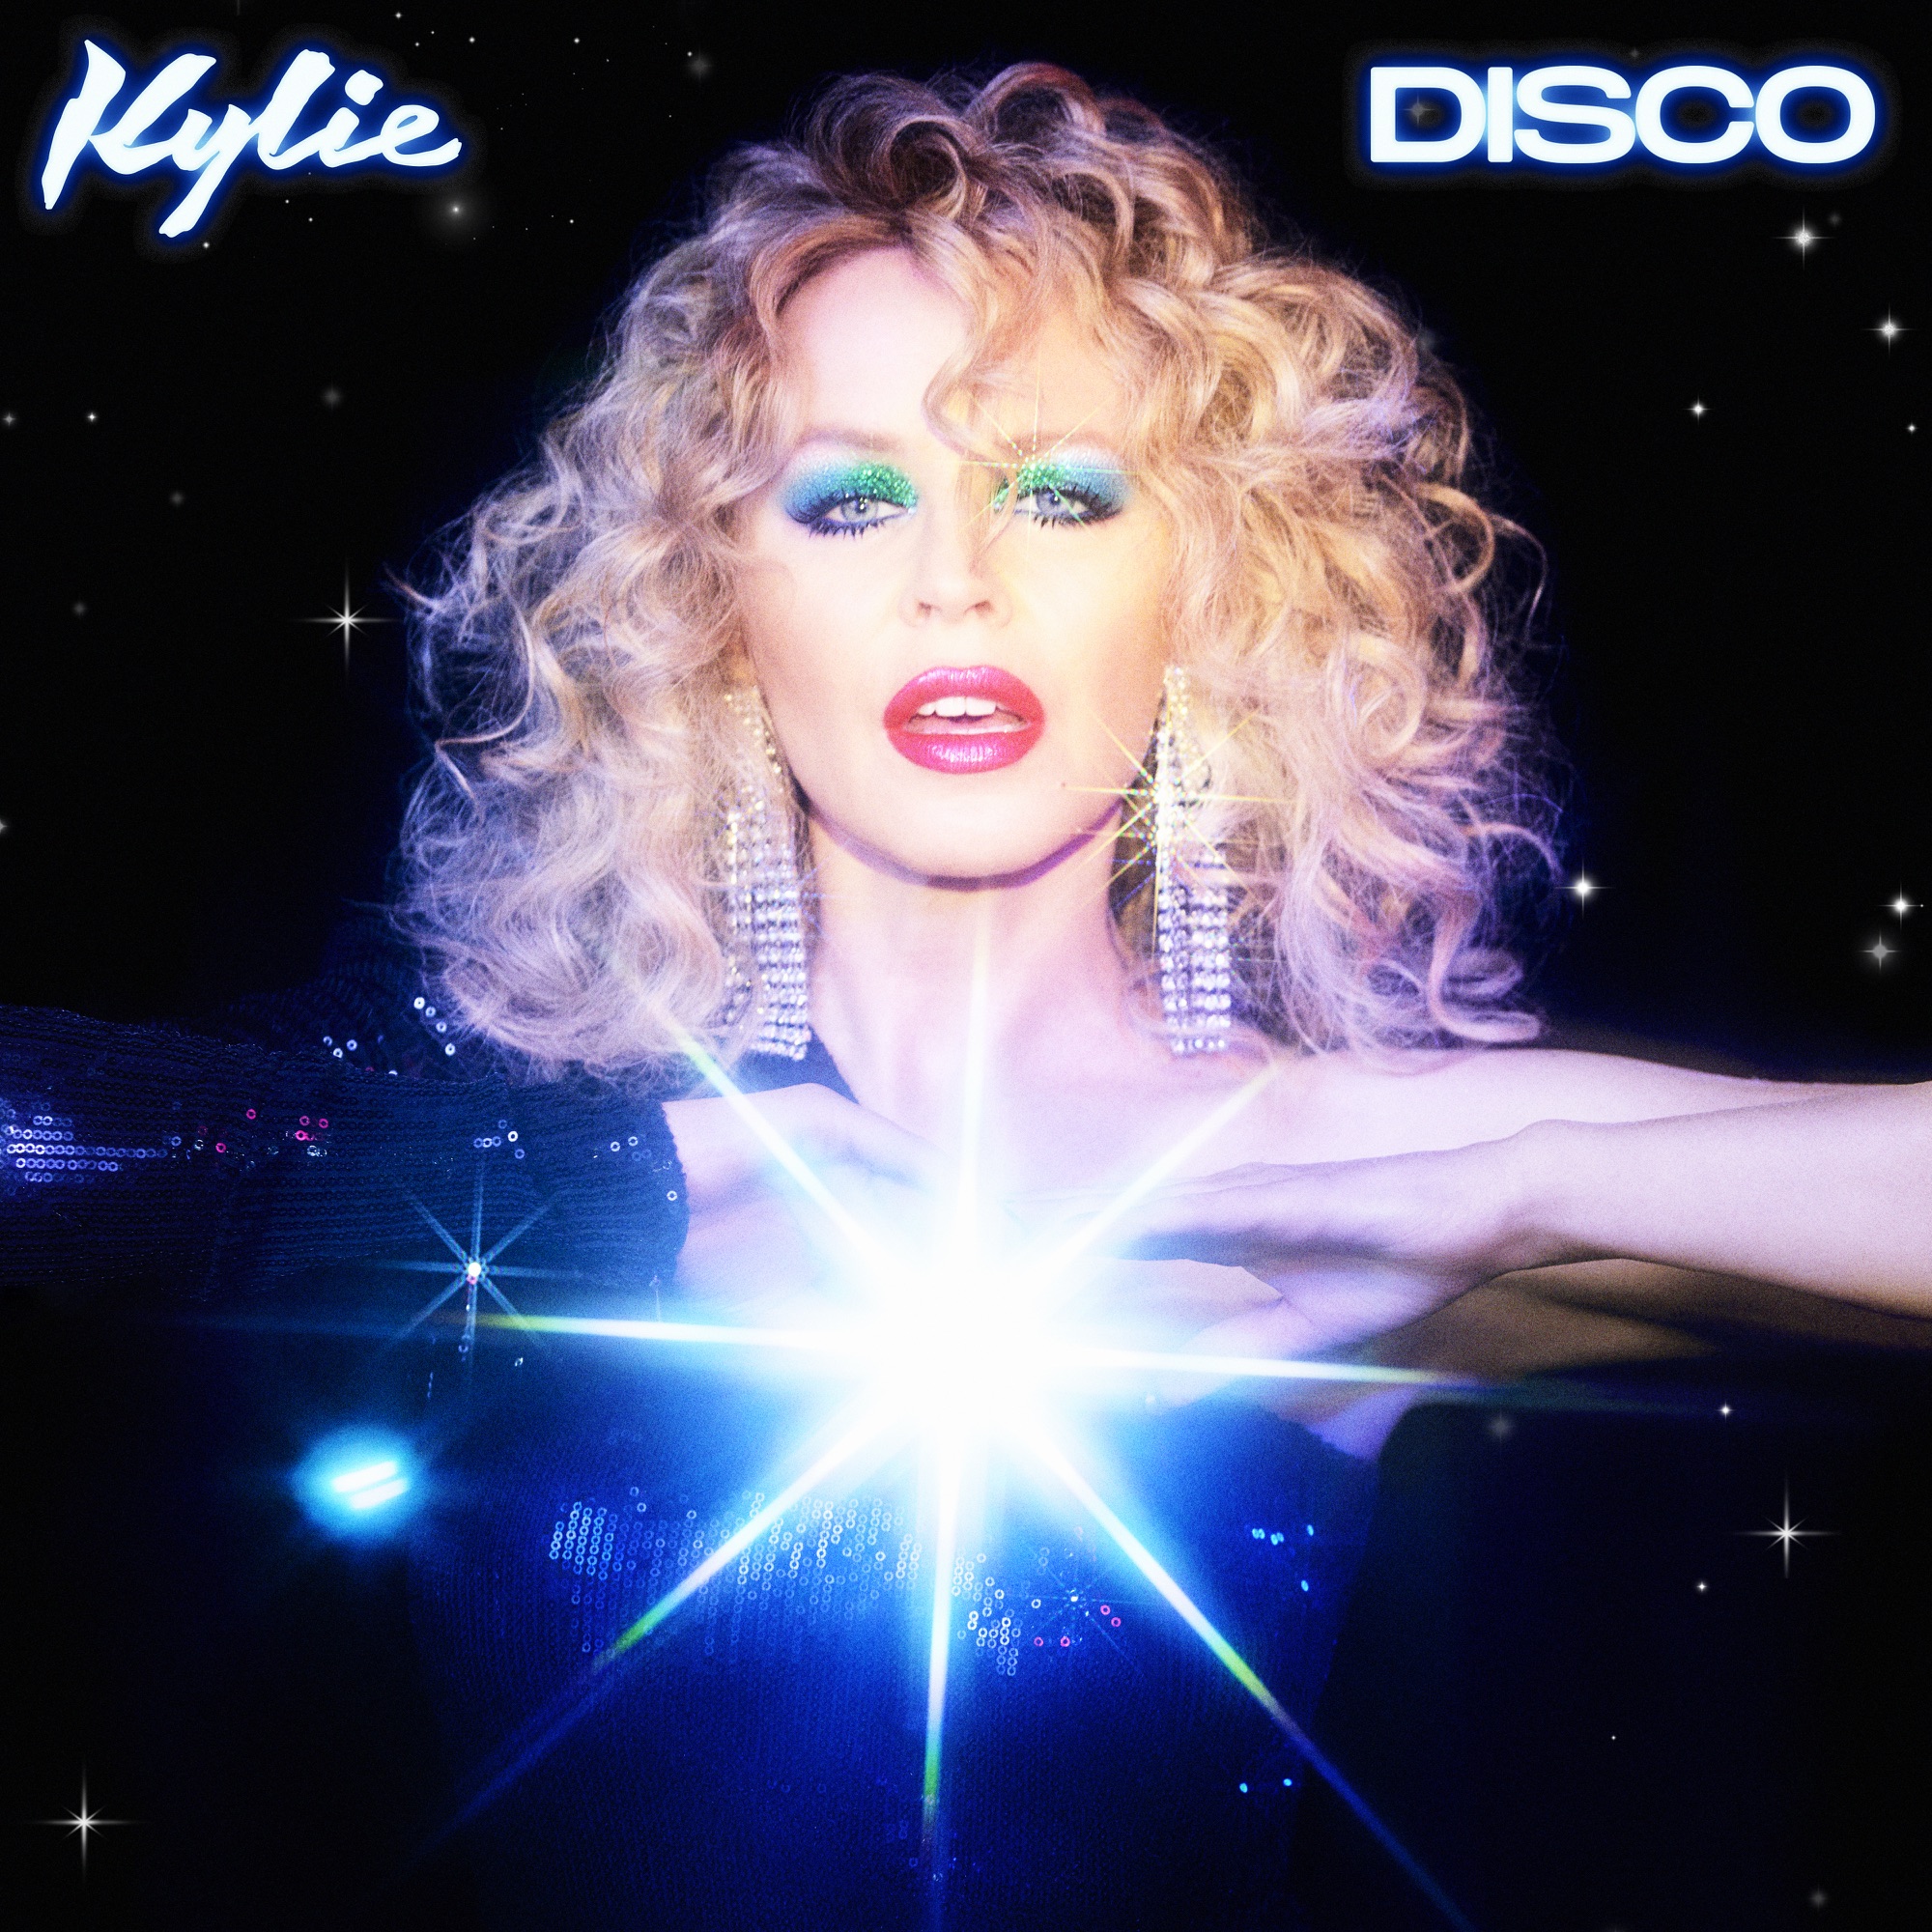 Kylie Minogue - DISCO (Deluxe)